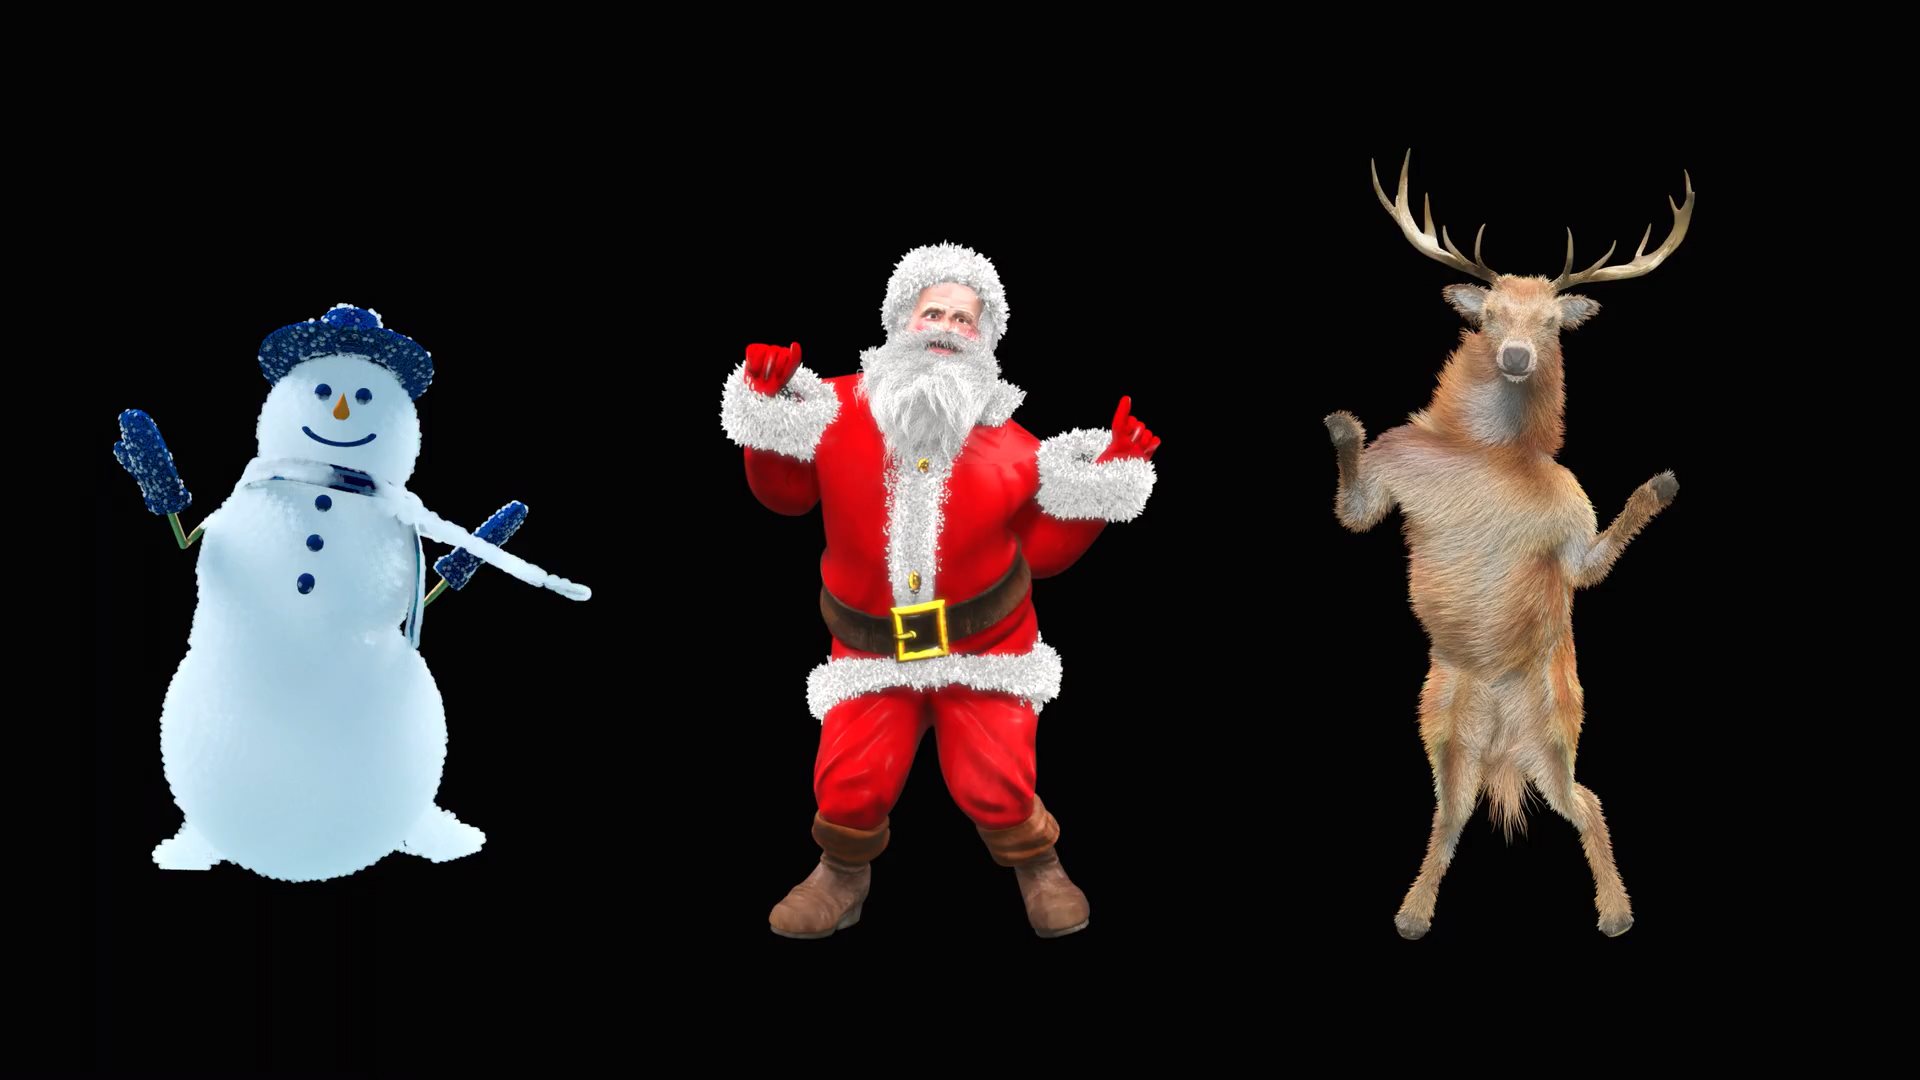 Video of a Snowman, Santa Claus and a Reindeer dancing away